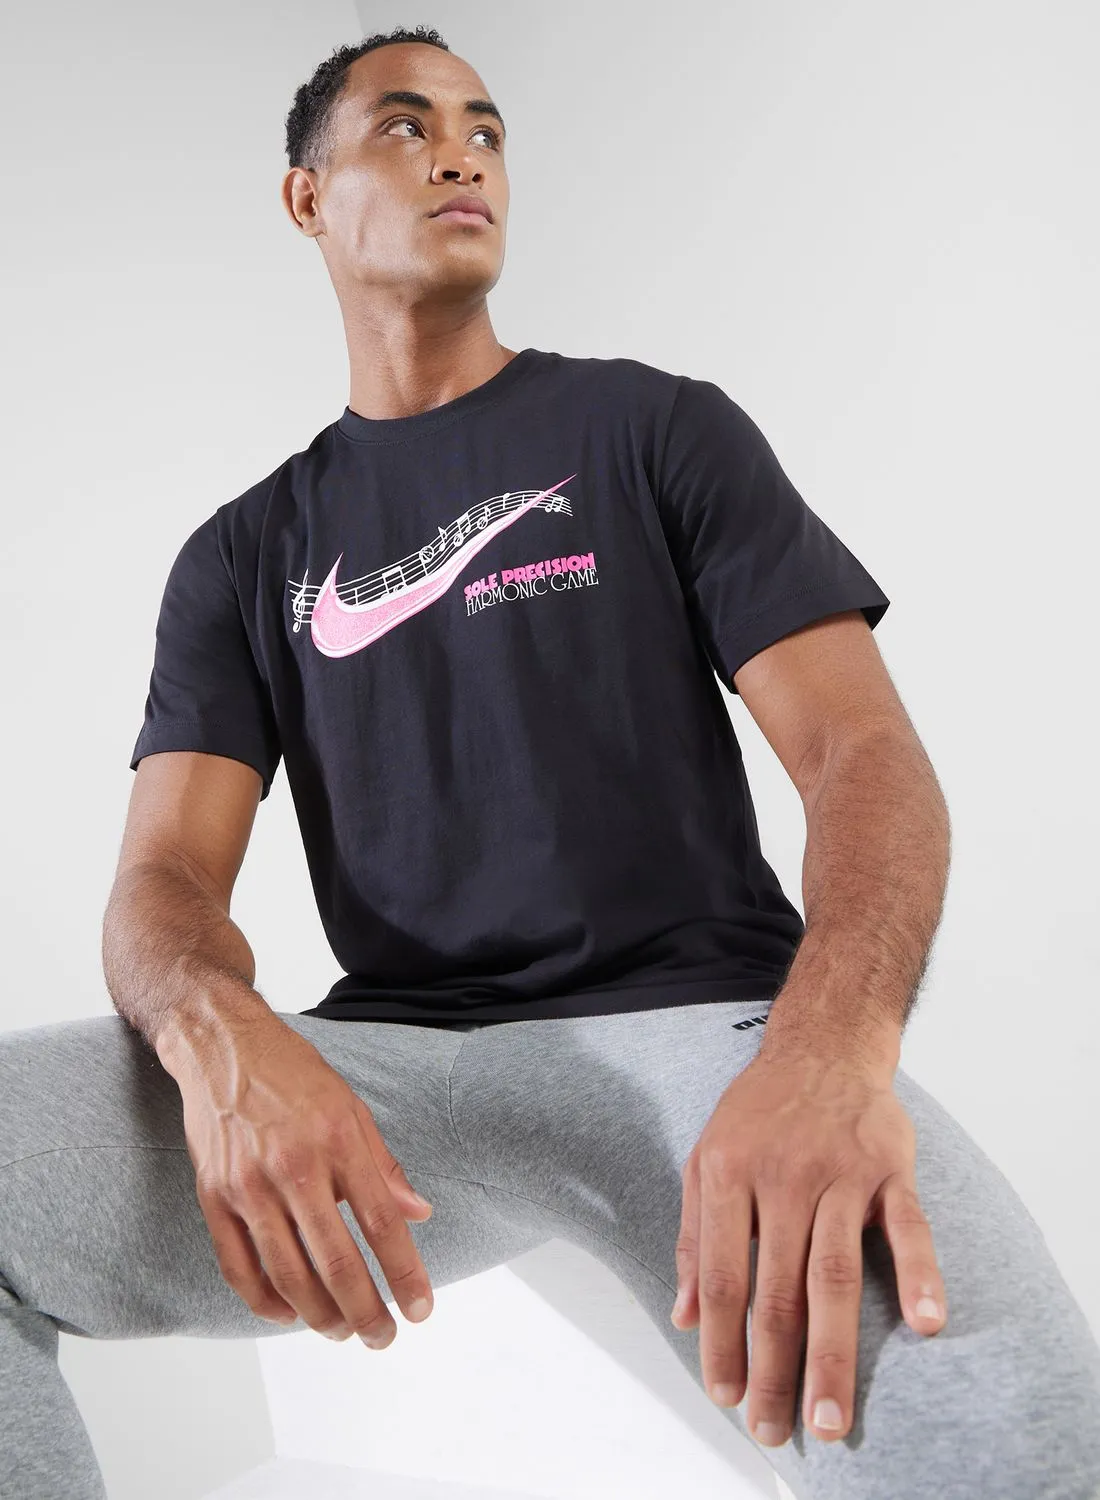 Nike Logo Oc Sp24 T-Shirt